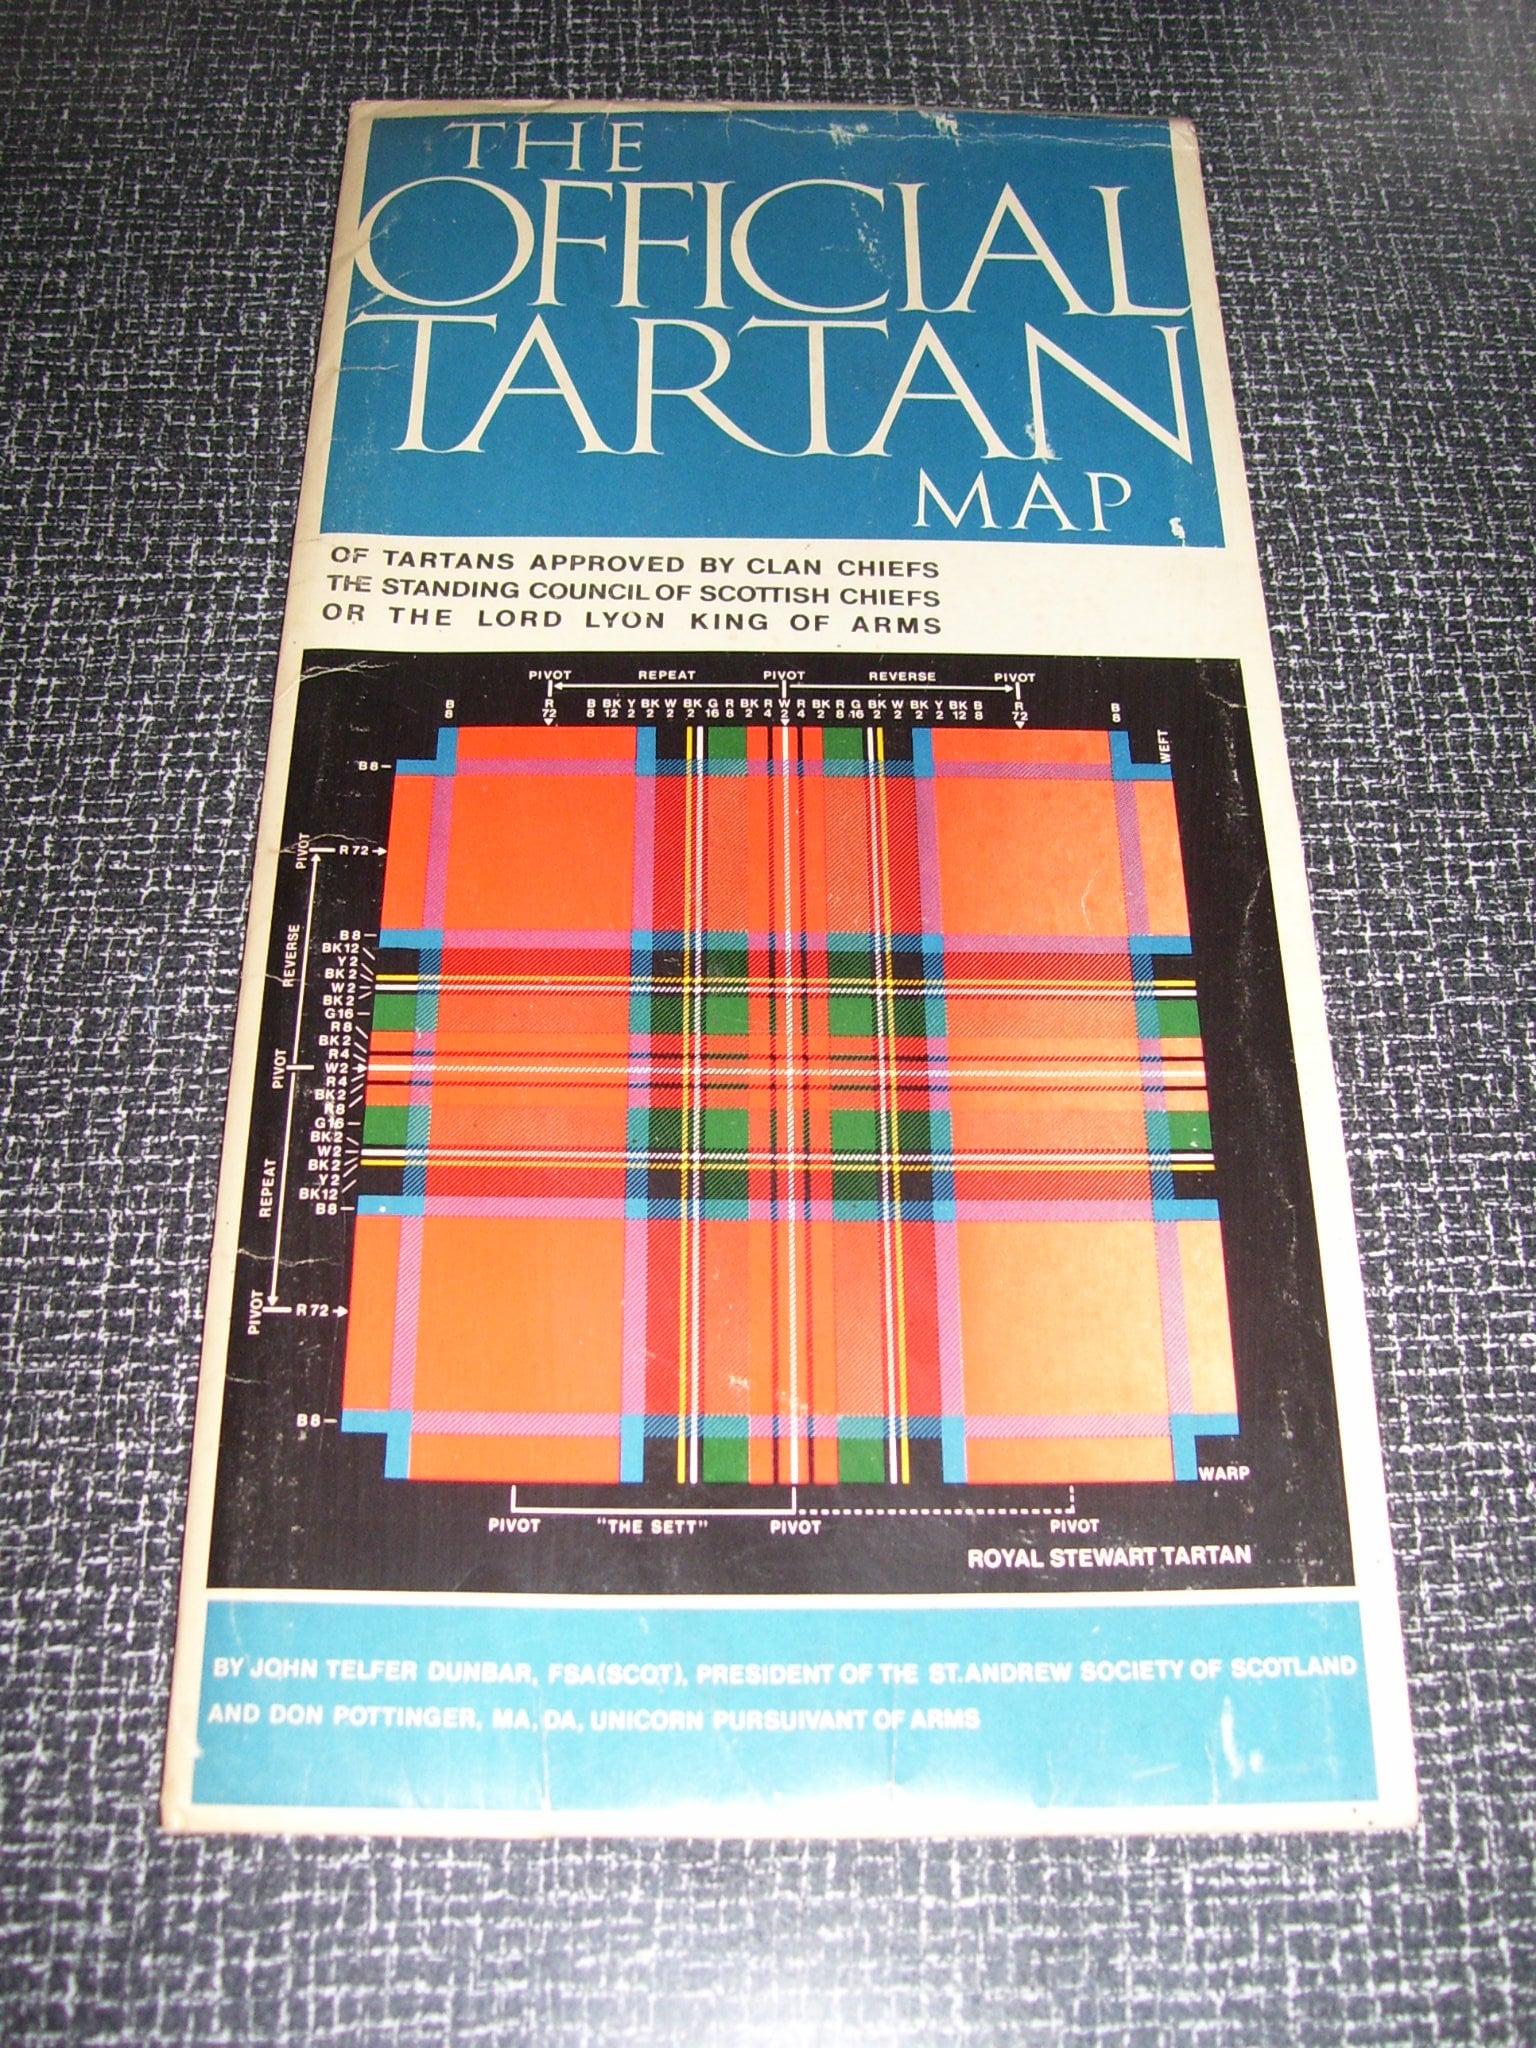 The Official Tartan Map by John Telfer Dunbar Scottish Tartan 1976 34.75x48